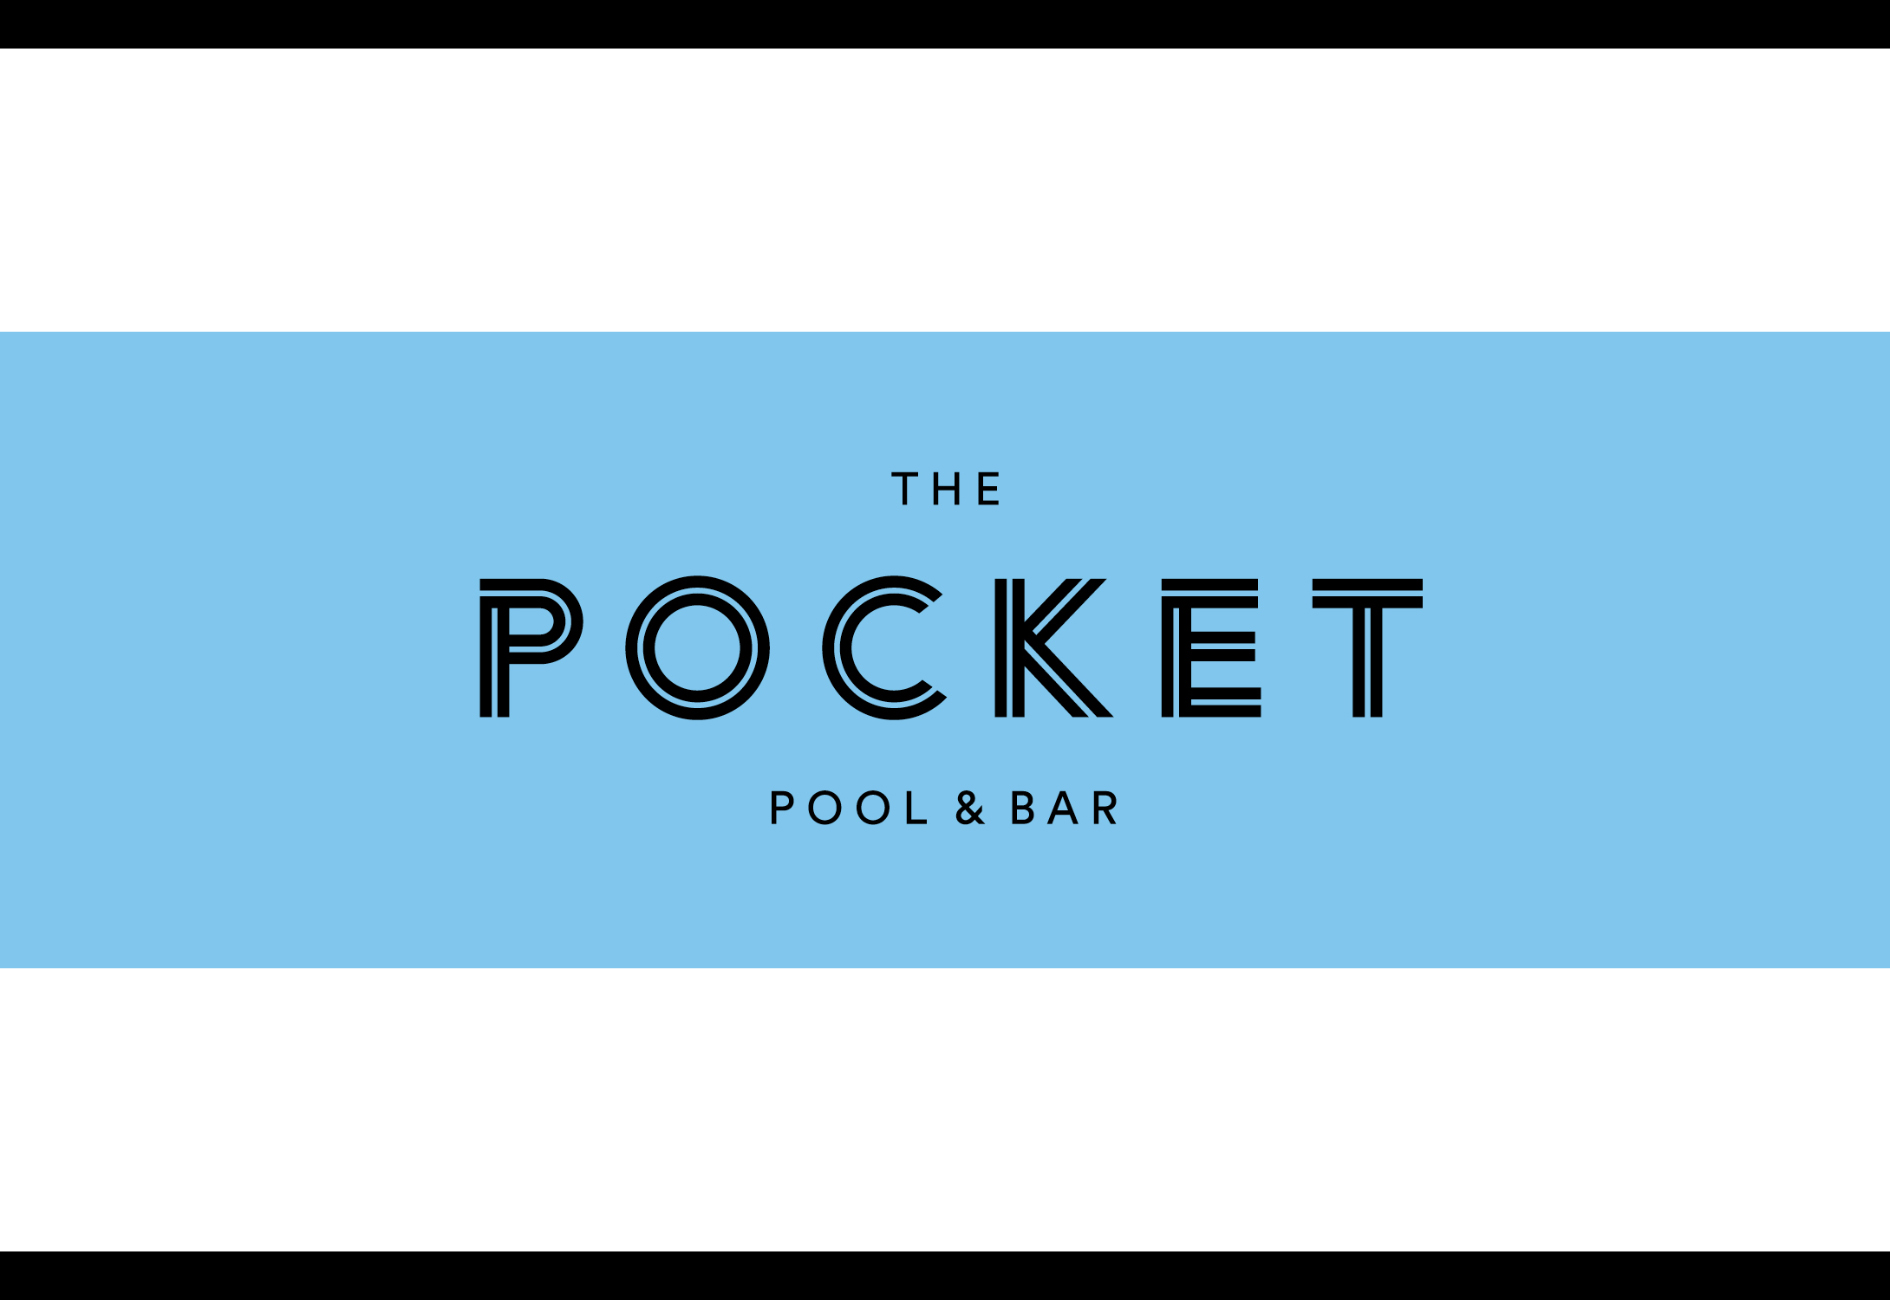 The Pocket Pool & Bar designed by Mark Zeff